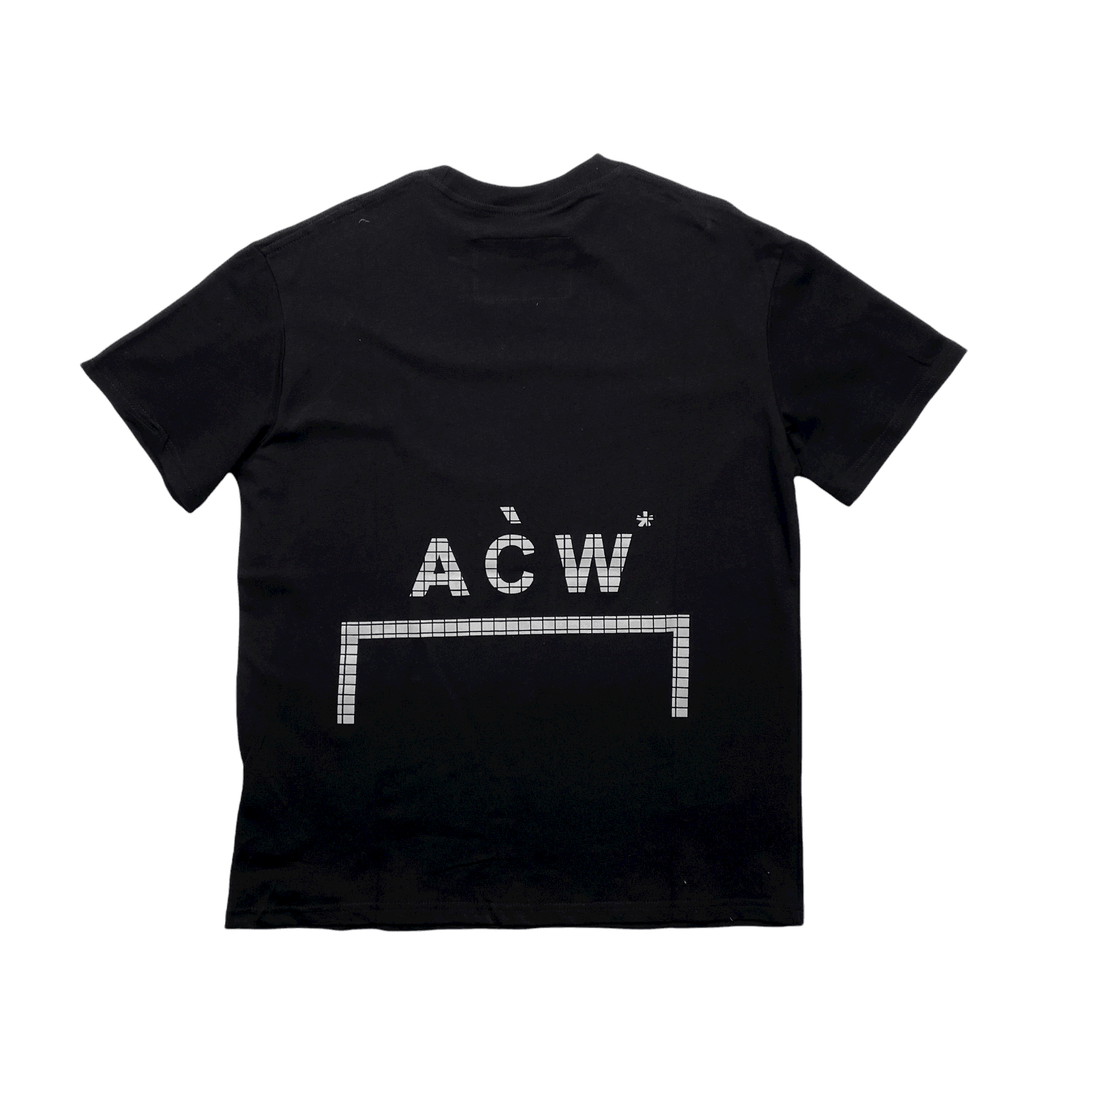 Black A-COLD-WALL (ACW) Tee - Medium - The Streetwear Studio